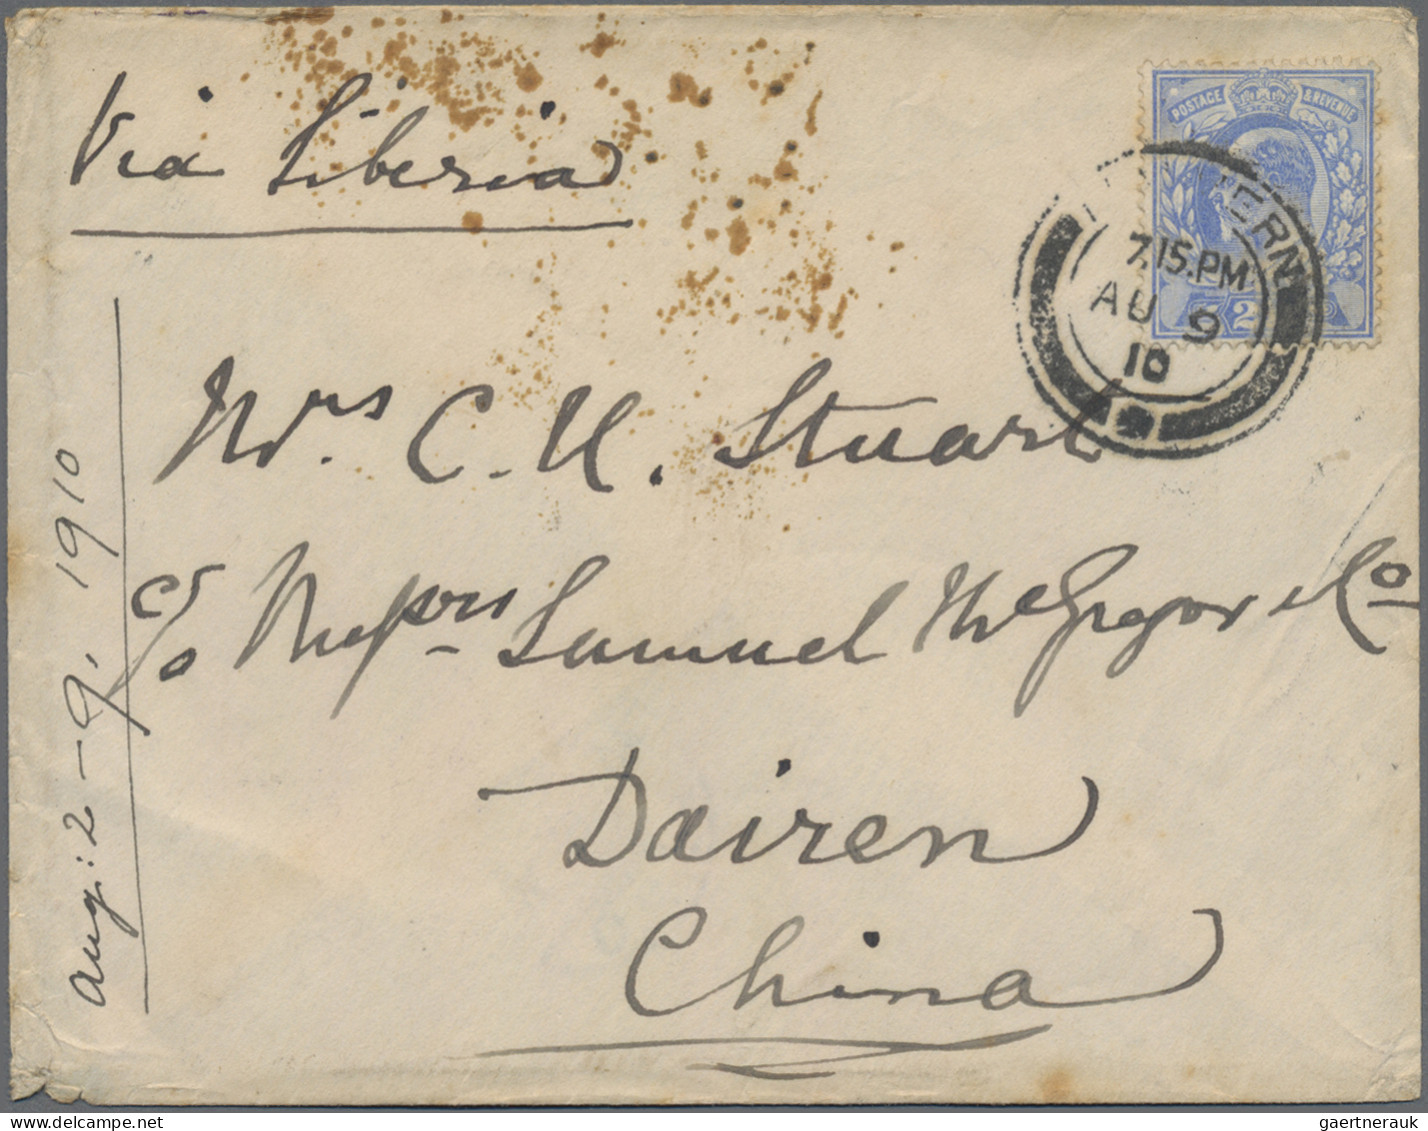 Japanese Post in China: 1910/1936, KLT/SMRZ markings on cover: Moukden I.J.P.O.